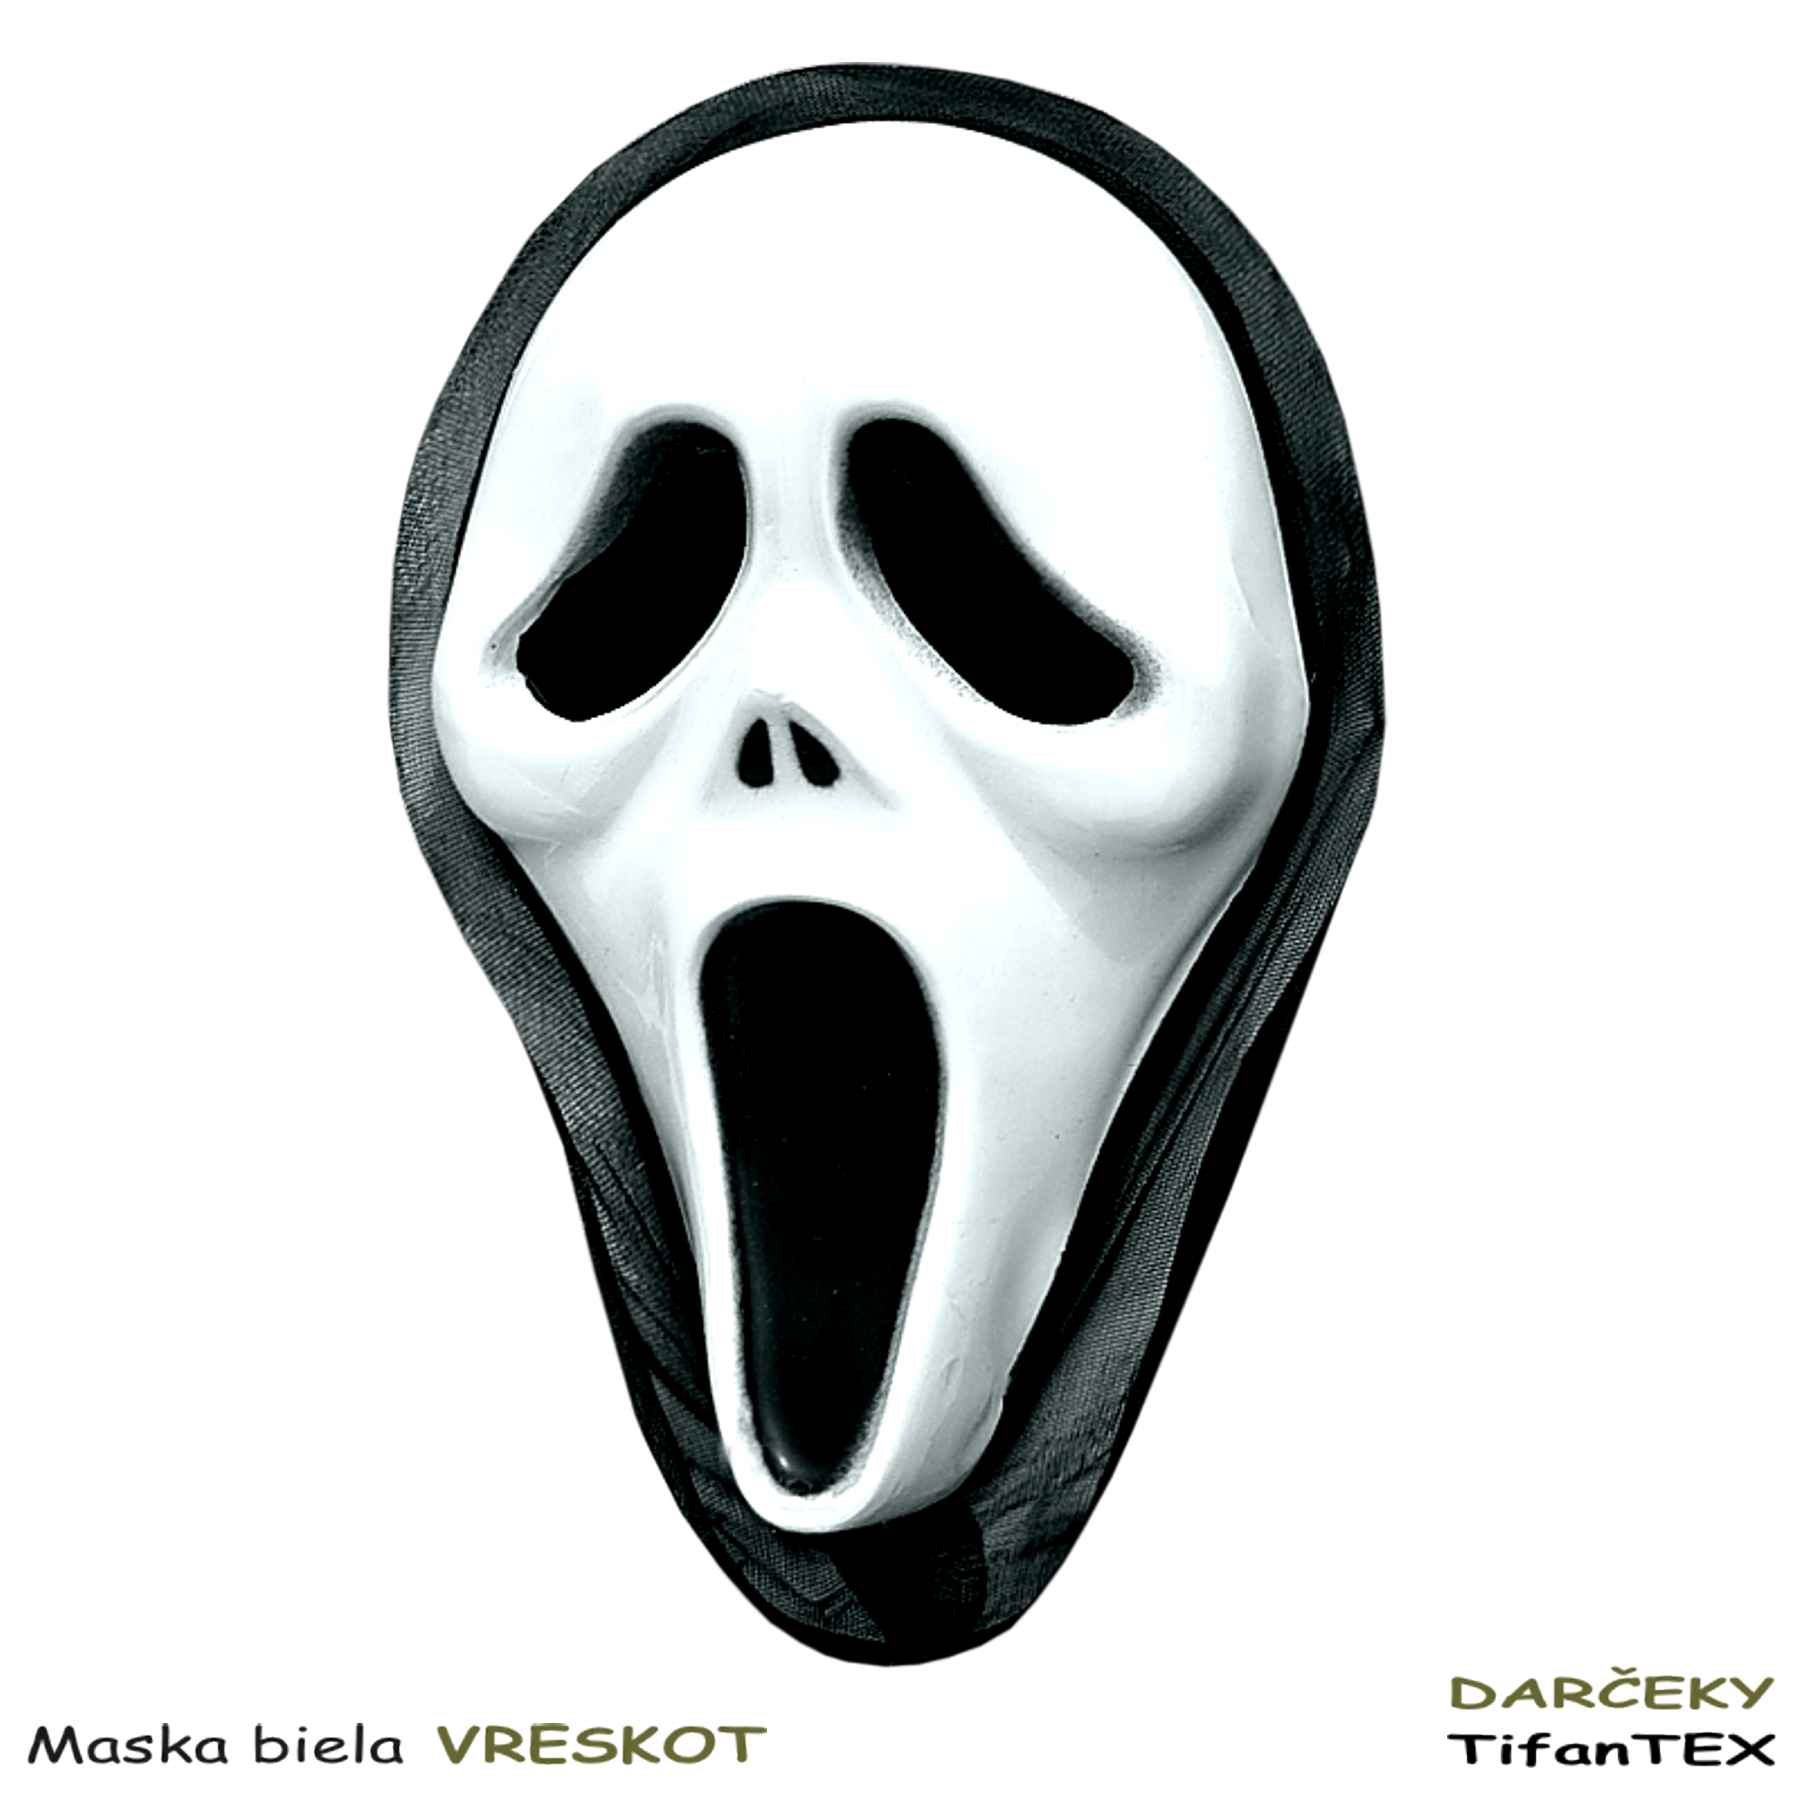 Plesová maska Vreskot - Tifantex masky